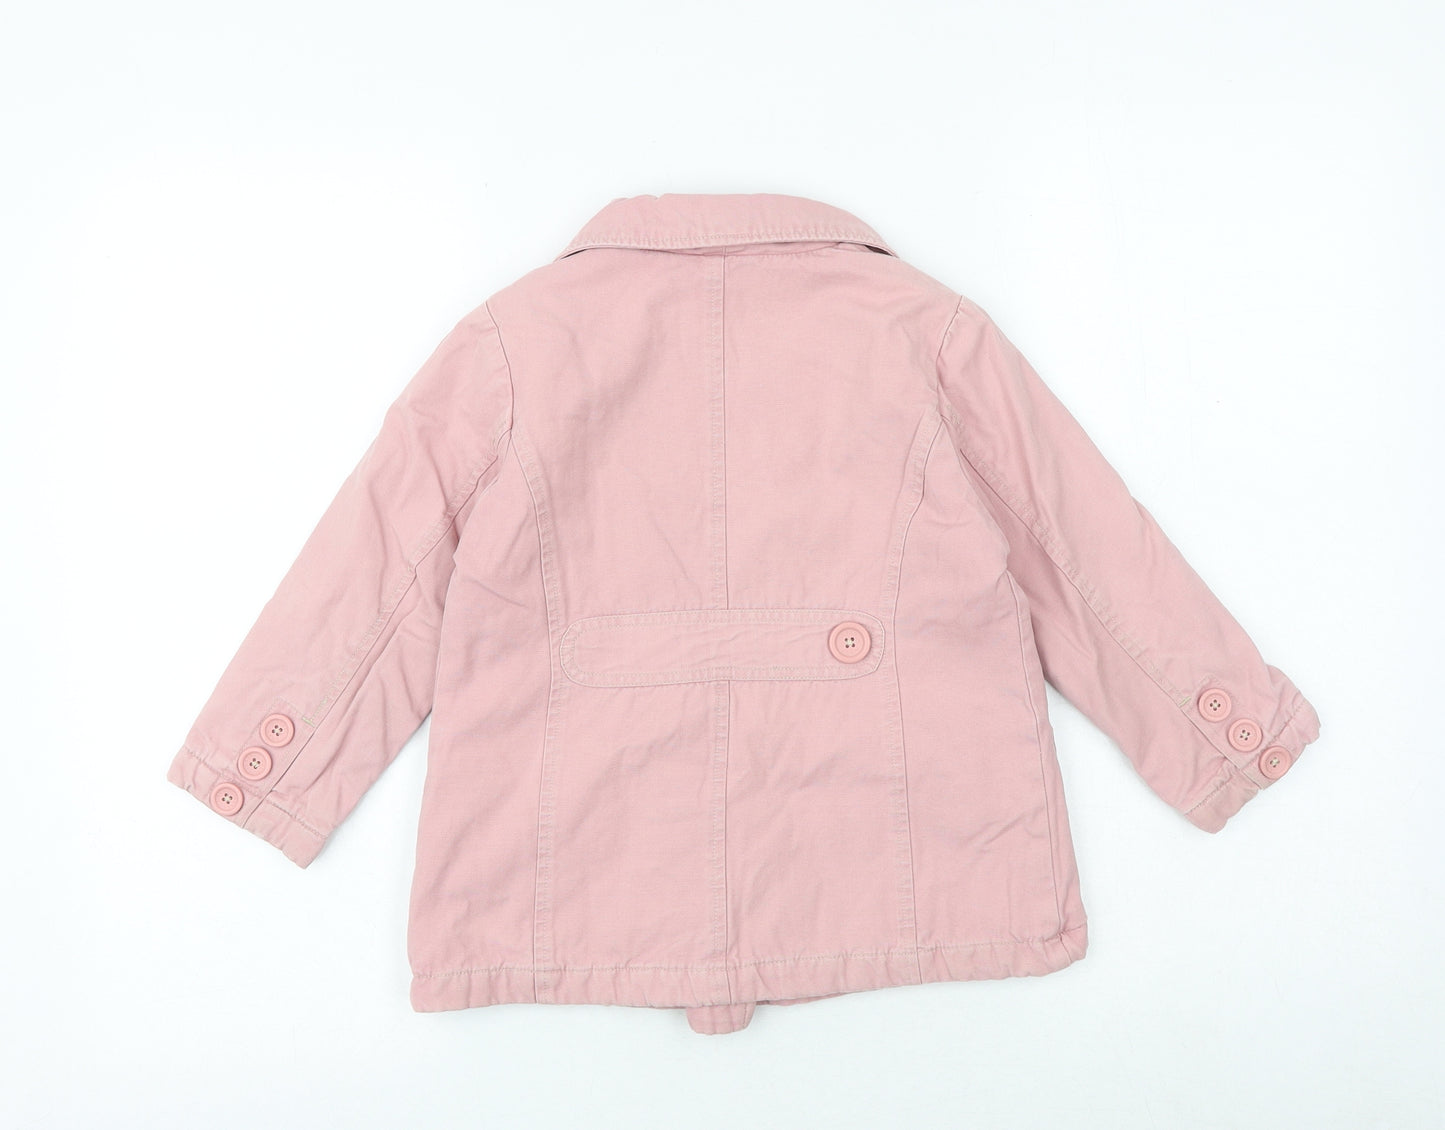 NEXT Girls Pink Jacket Size 3-4 Years Button